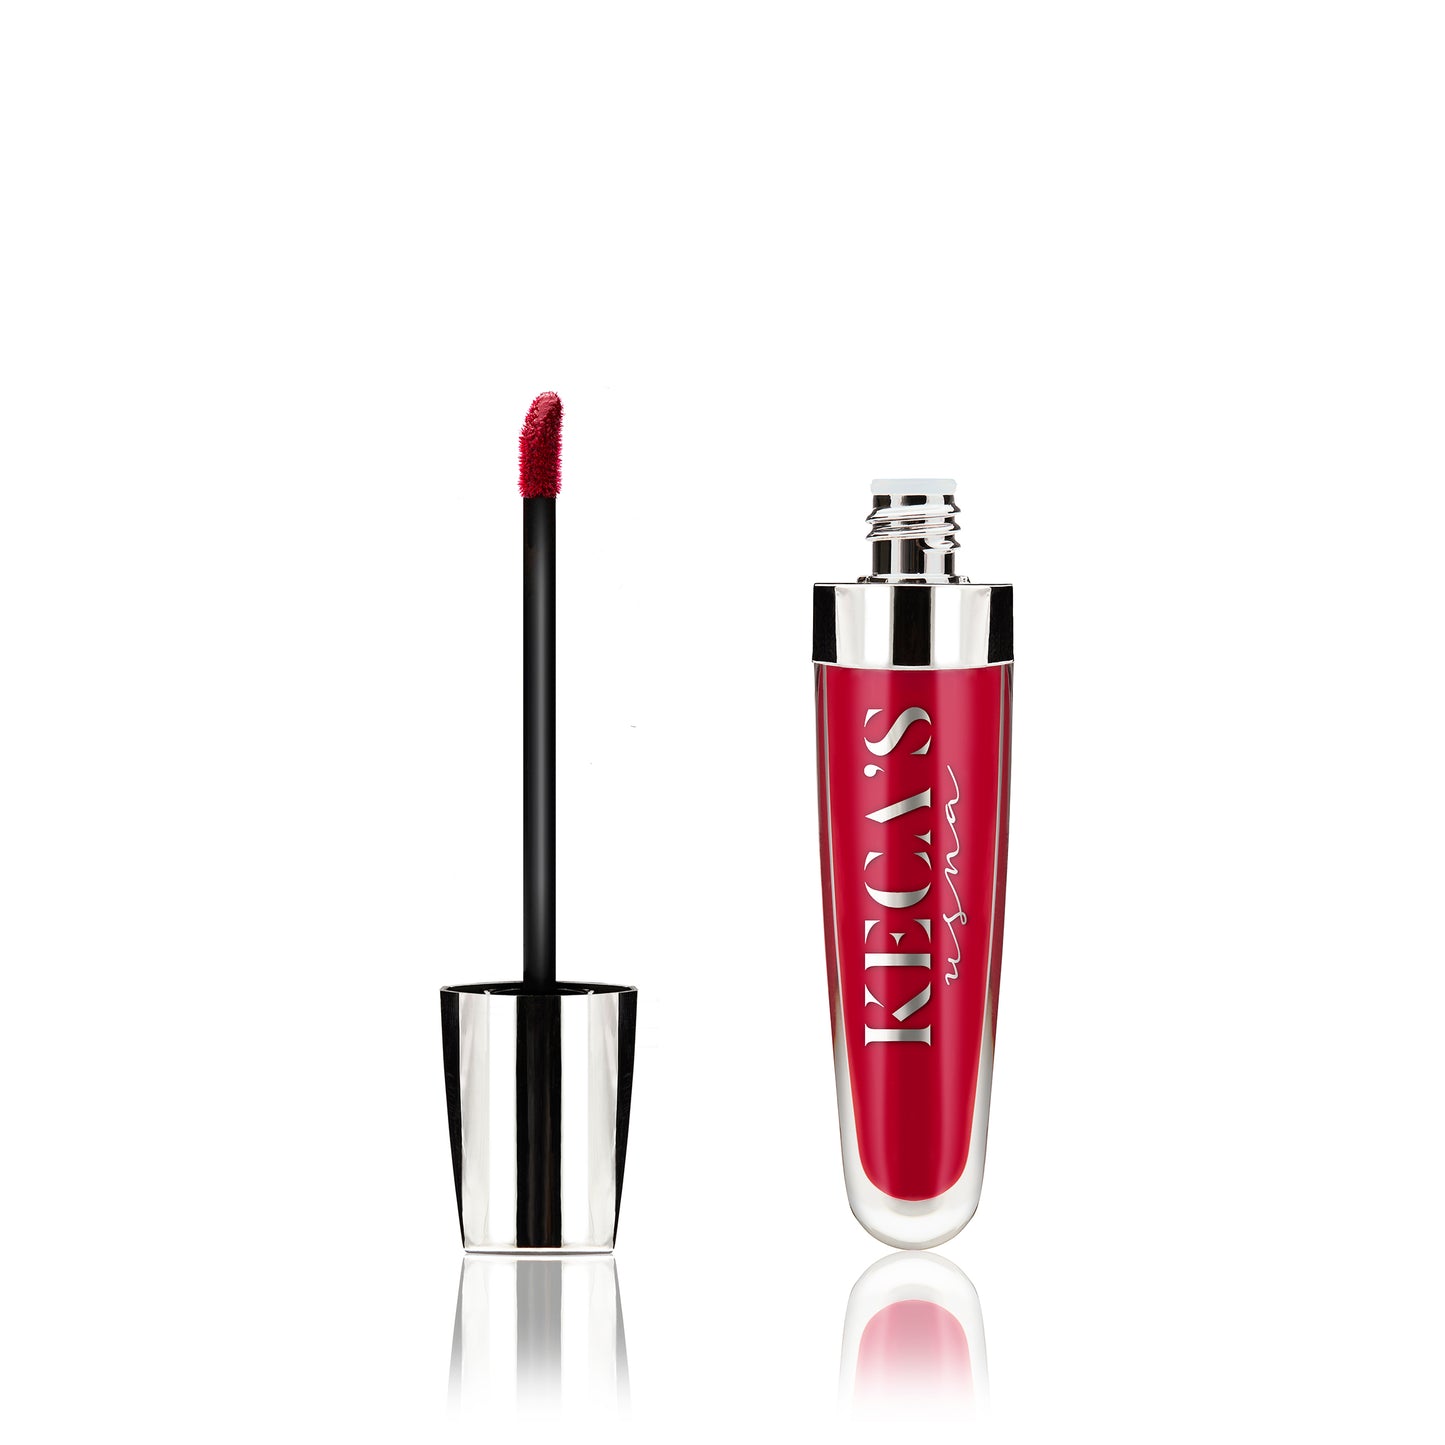 Stalno Crimson Gloss Finish - The Mirror Shine Liquid Lipstick